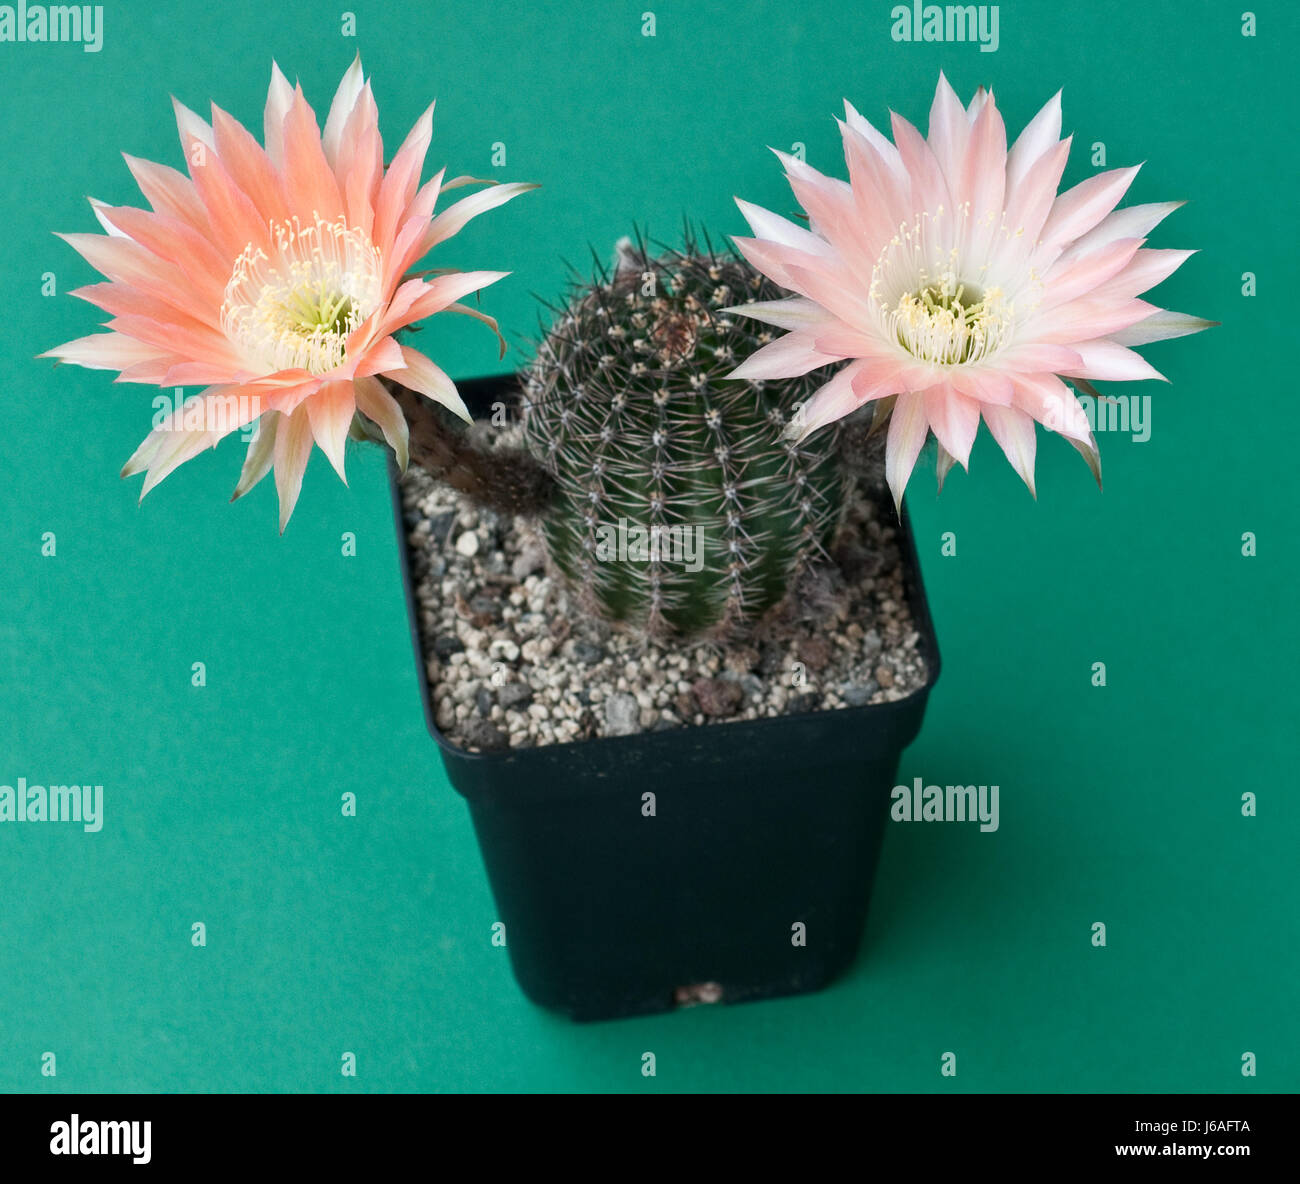 lachsfarben blooming cactus Stock Photo